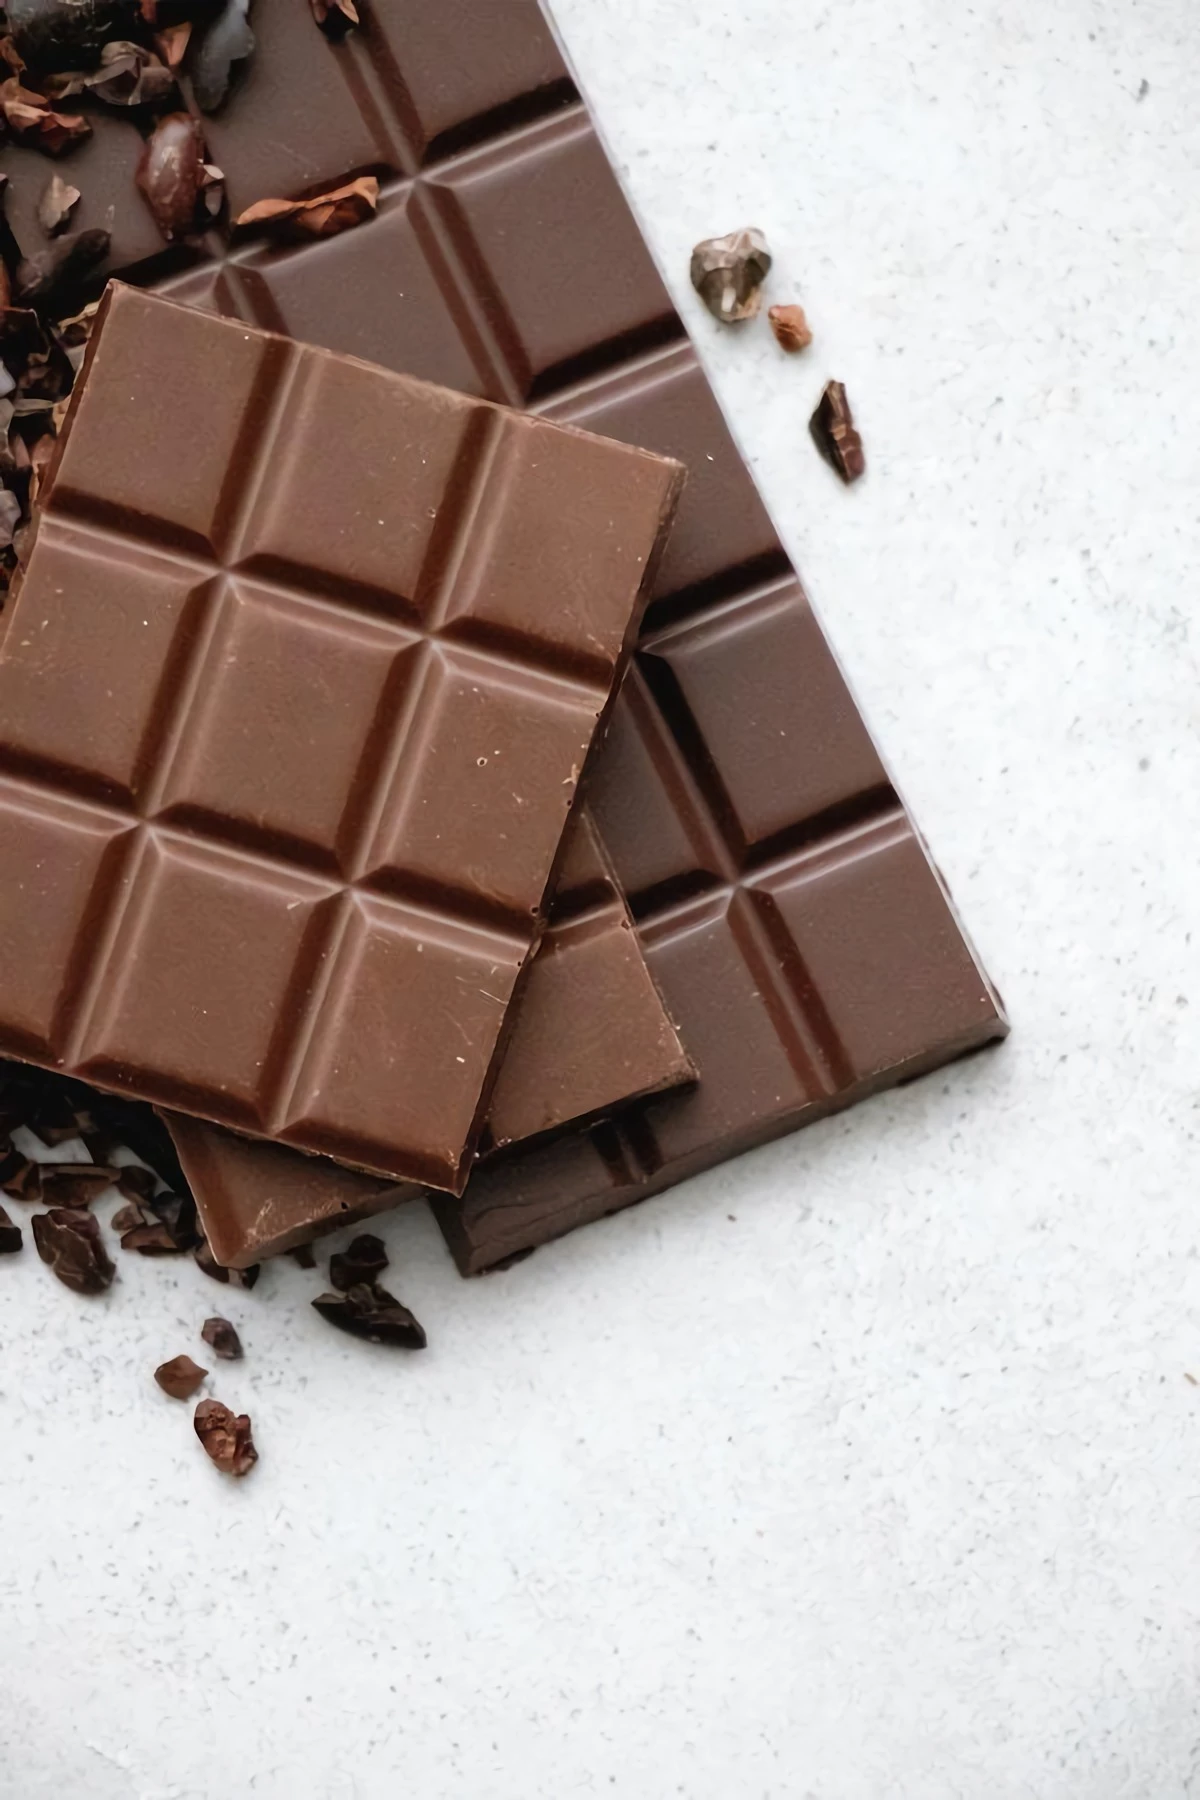 three types of chocolates on white background